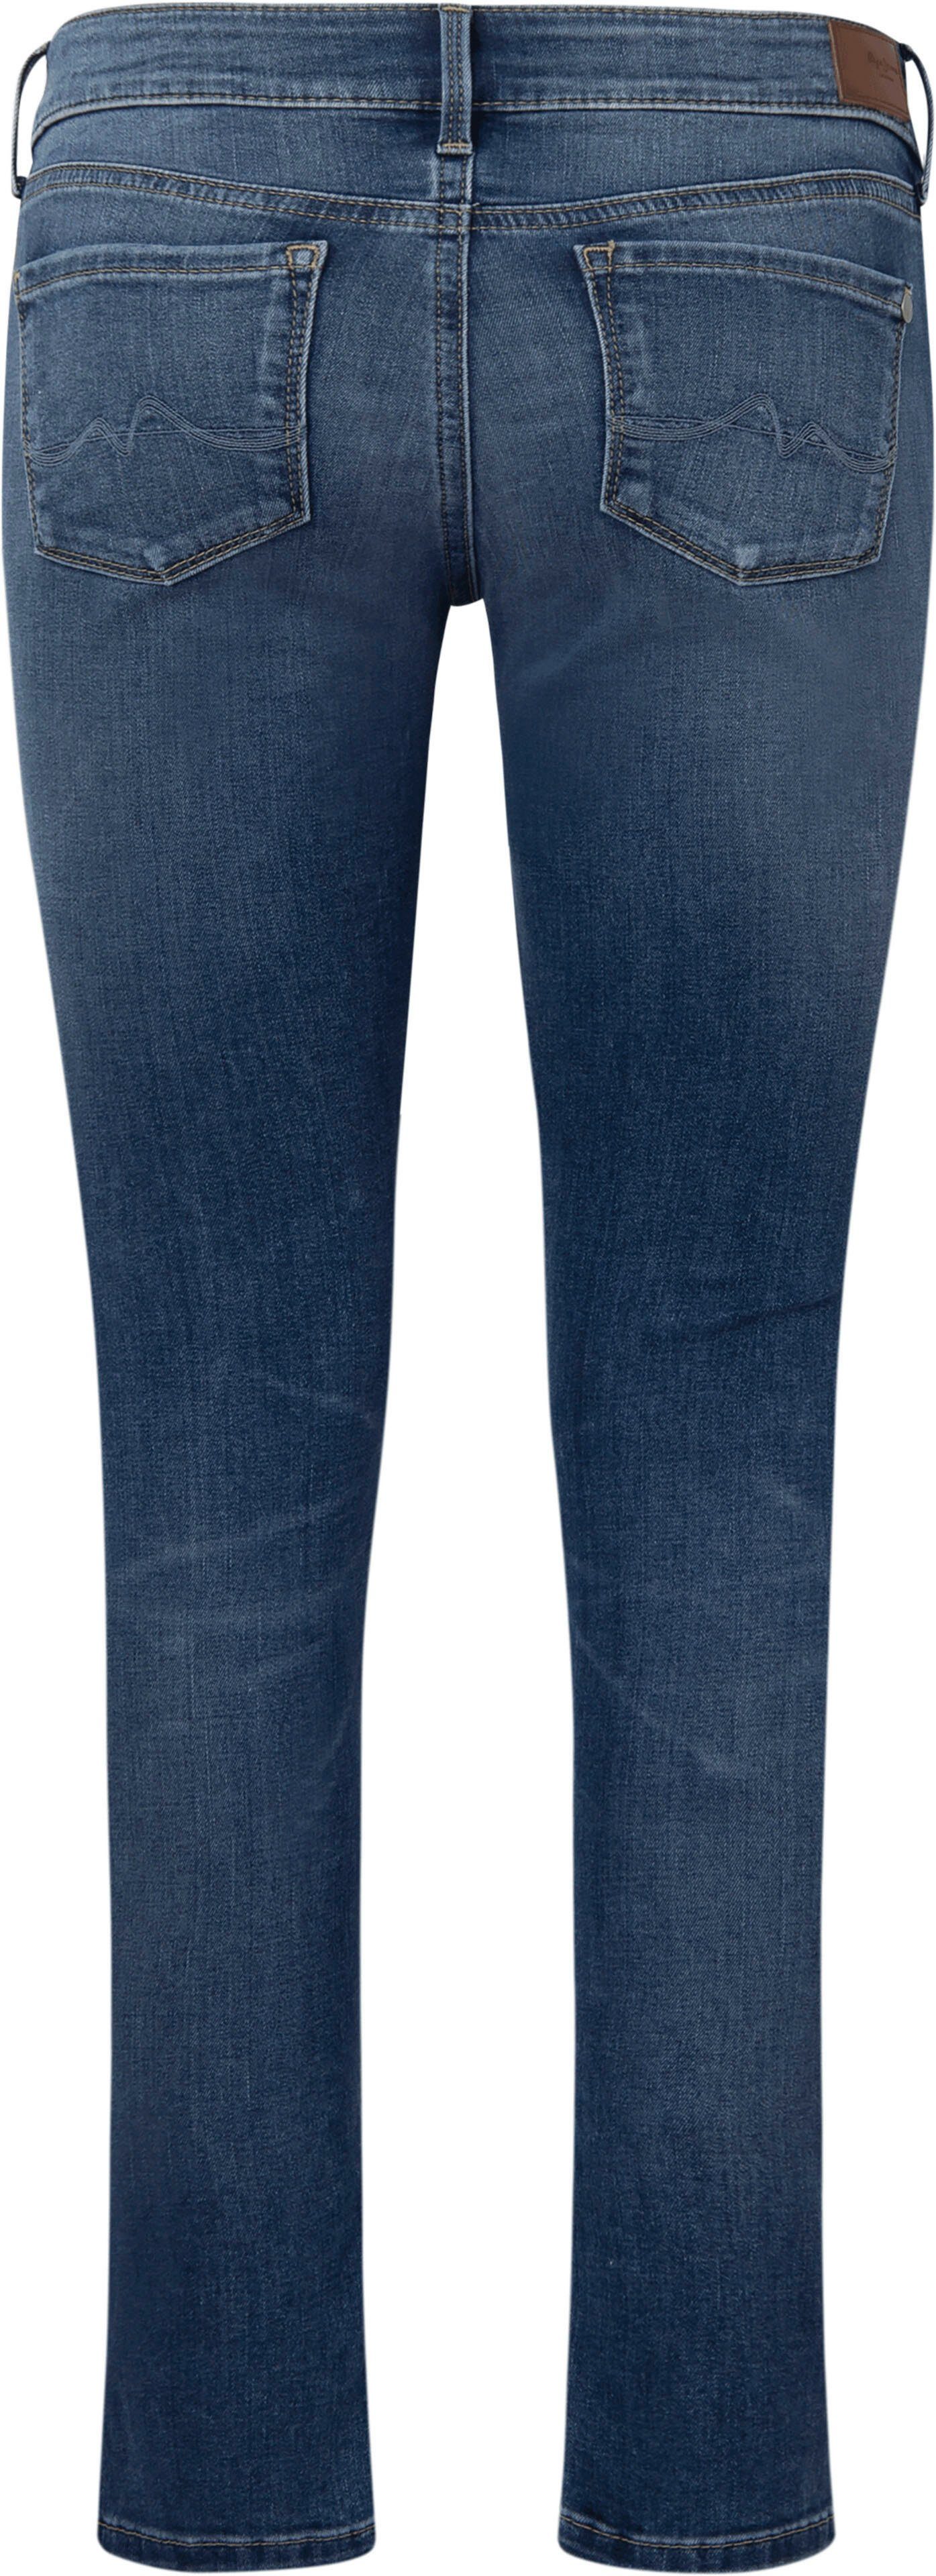 Pepe Jeans SOHO und Bund blue 5-Pocket-Stil Skinny-fit-Jeans im mit Stretch-Anteil 1-Knopf